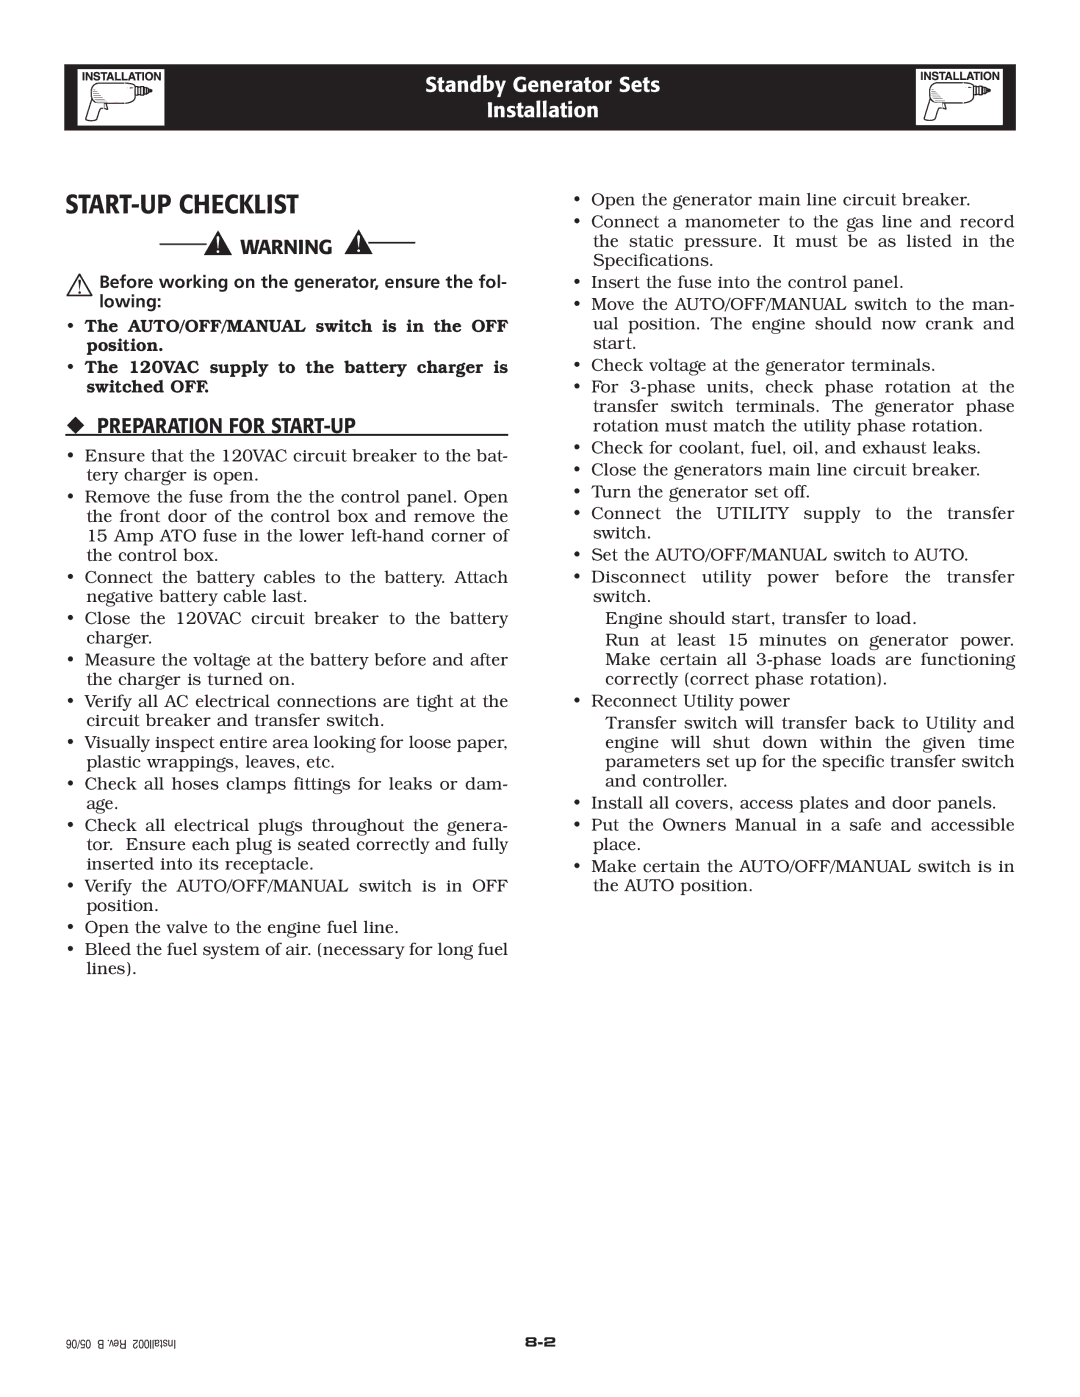 Siemens SG020 owner manual START-UP Checklist, ‹ Preparation for START-UP 